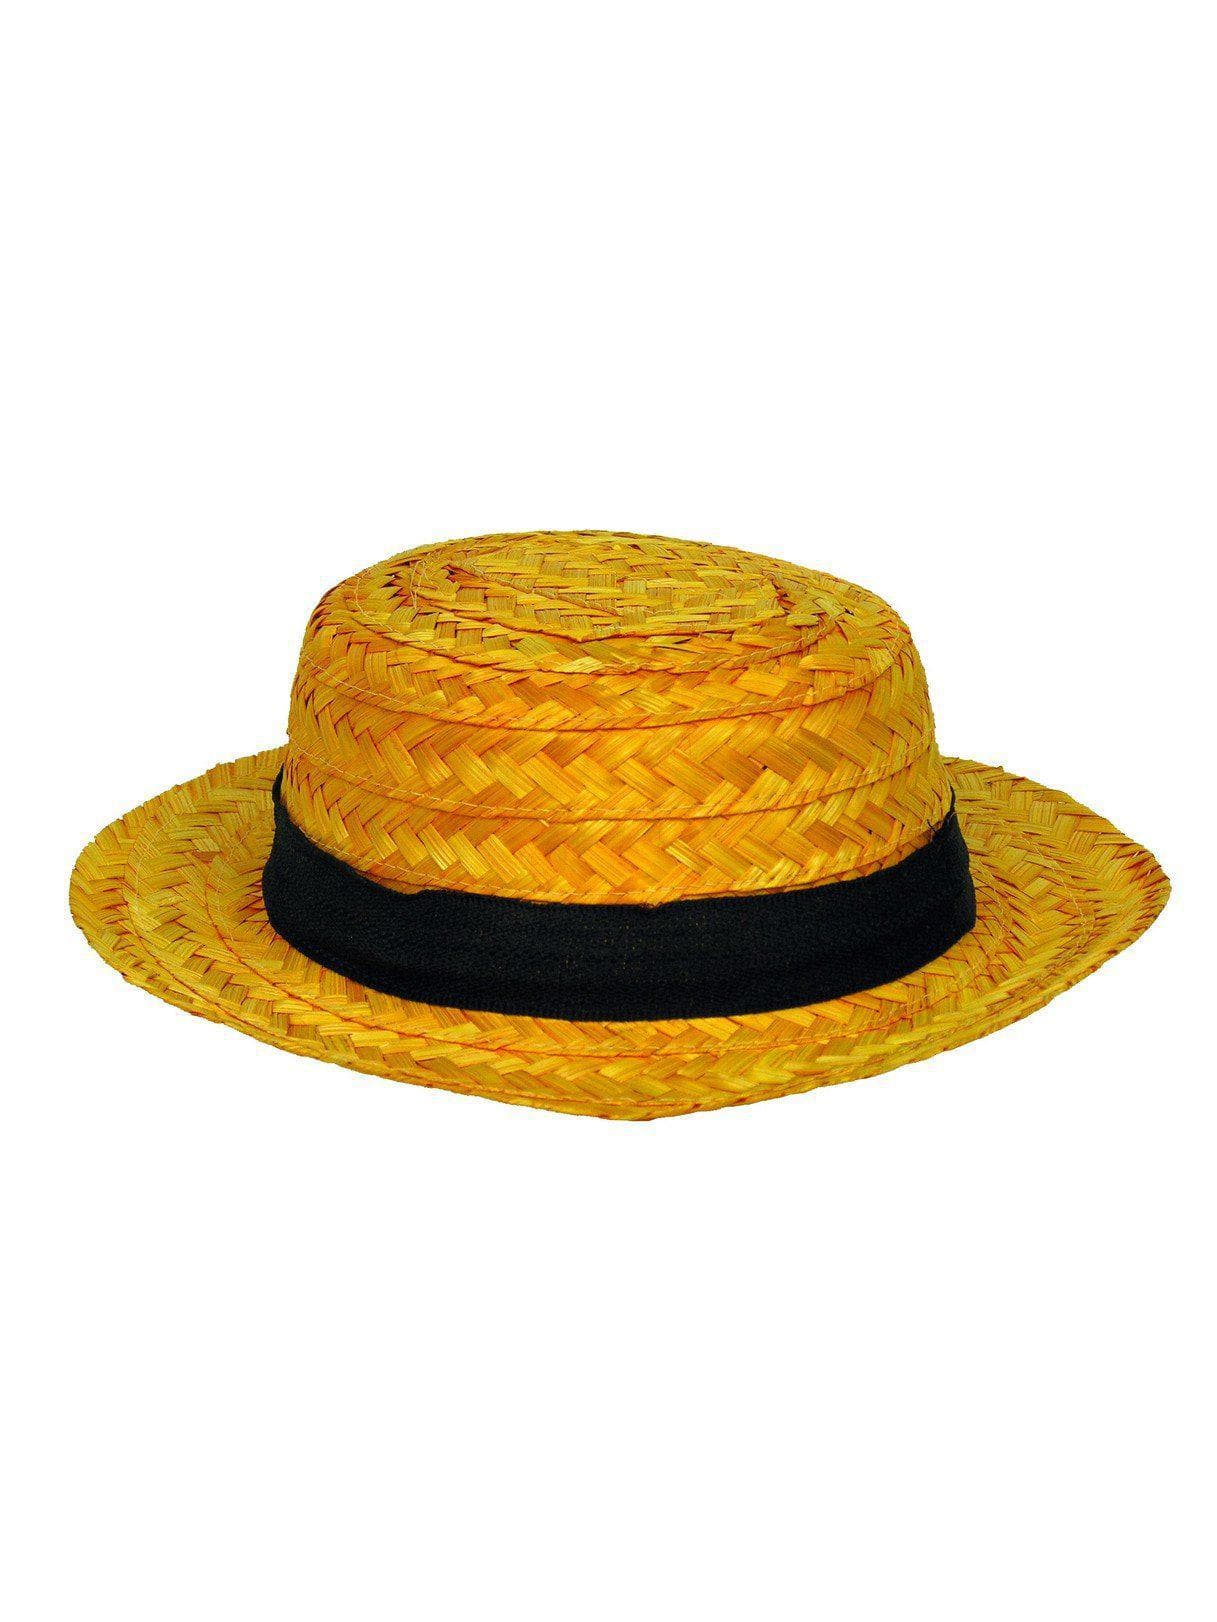 Adult 1920's Straw Skimmer Hat - costumes.com